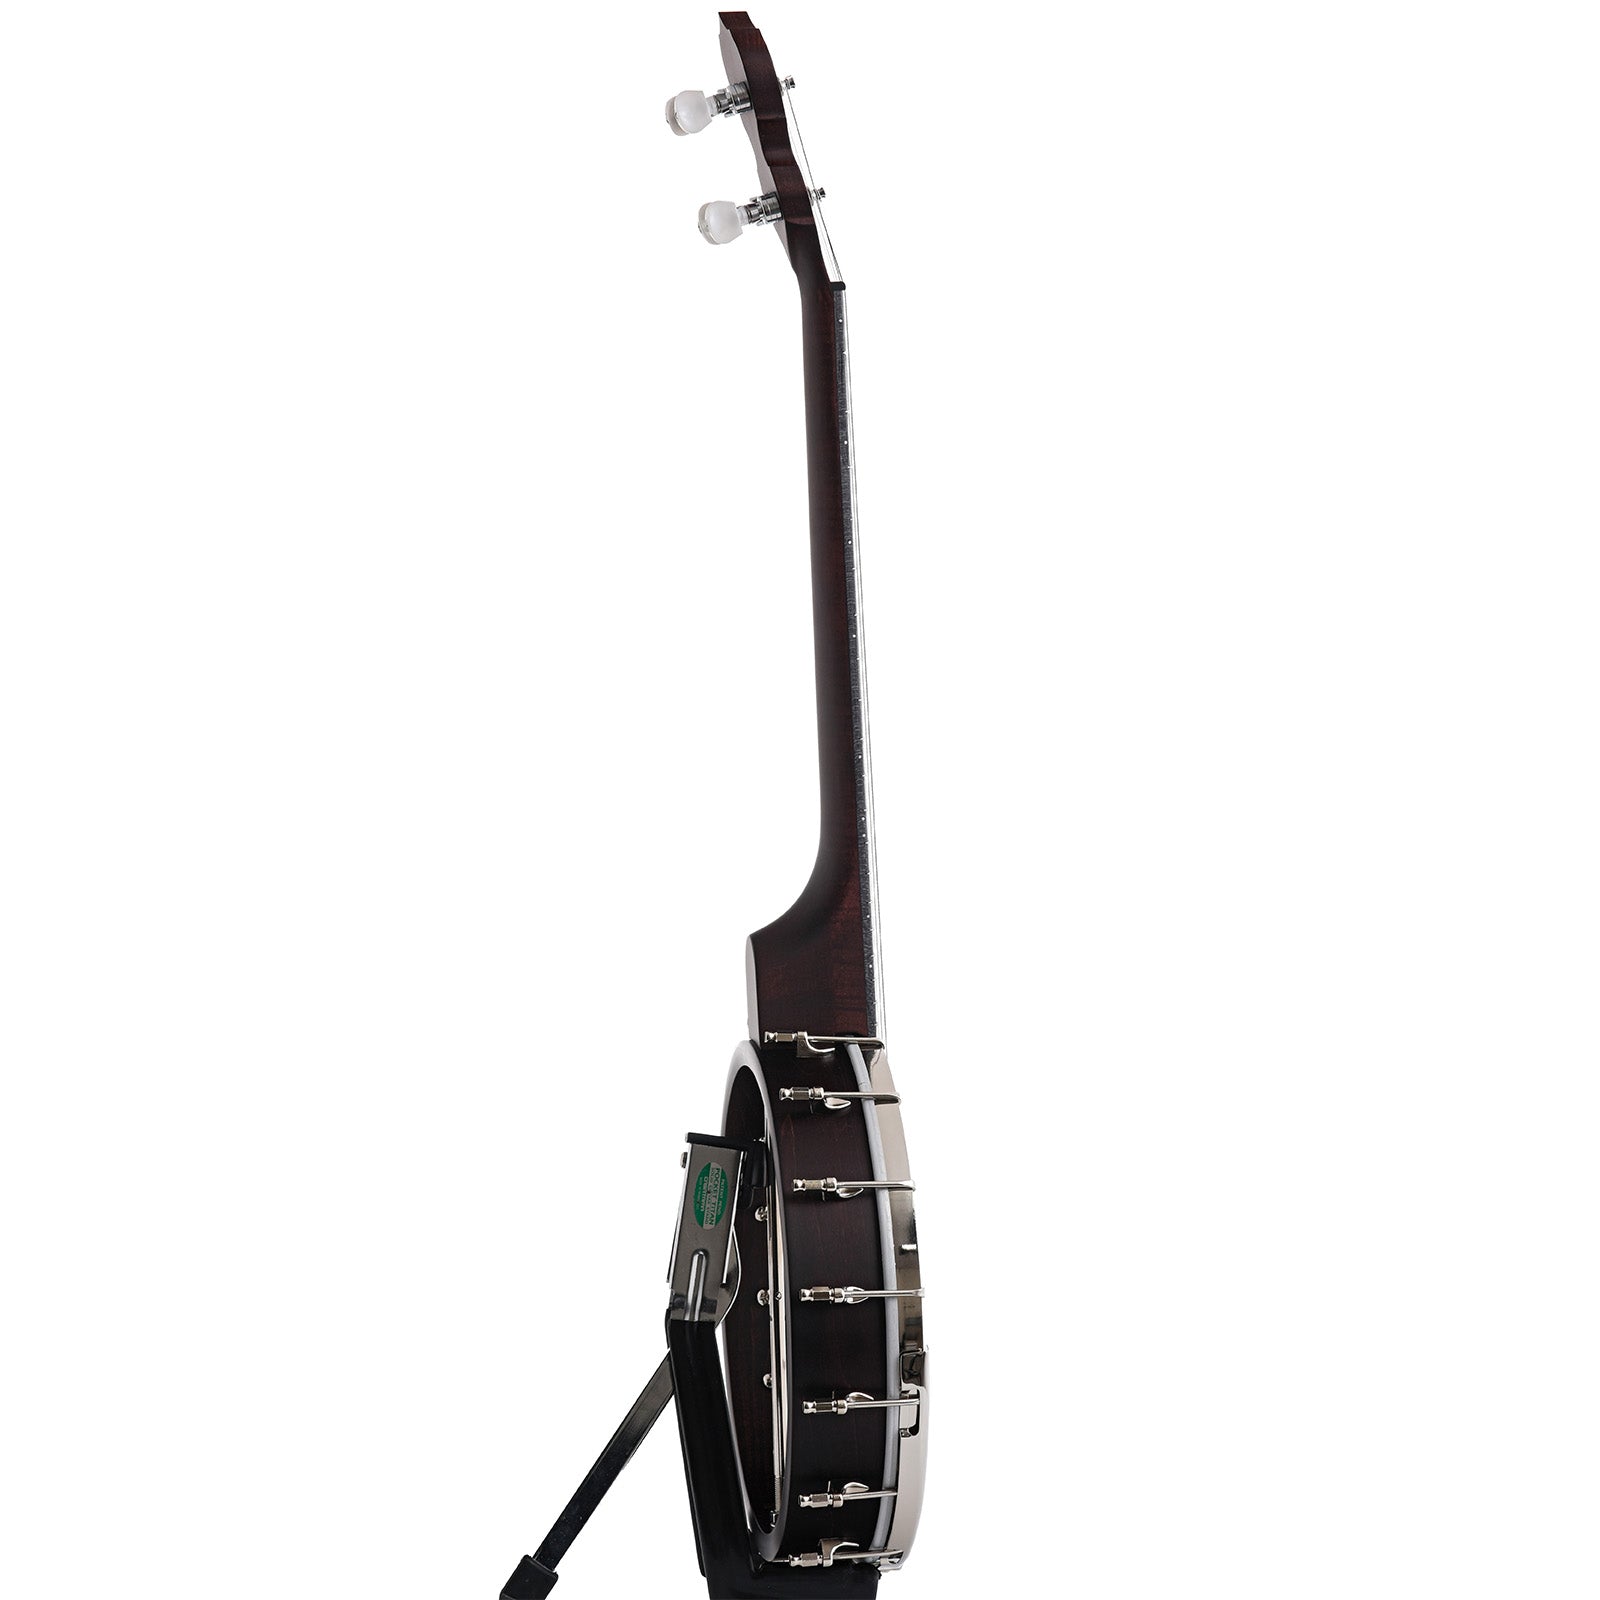 Image 12 of Deering Tenor Artisan Goodtime Banjo, 19-Fret Neck - SKU# T-AGOOD19 : Product Type Tenor & Plectrum Banjos : Elderly Instruments